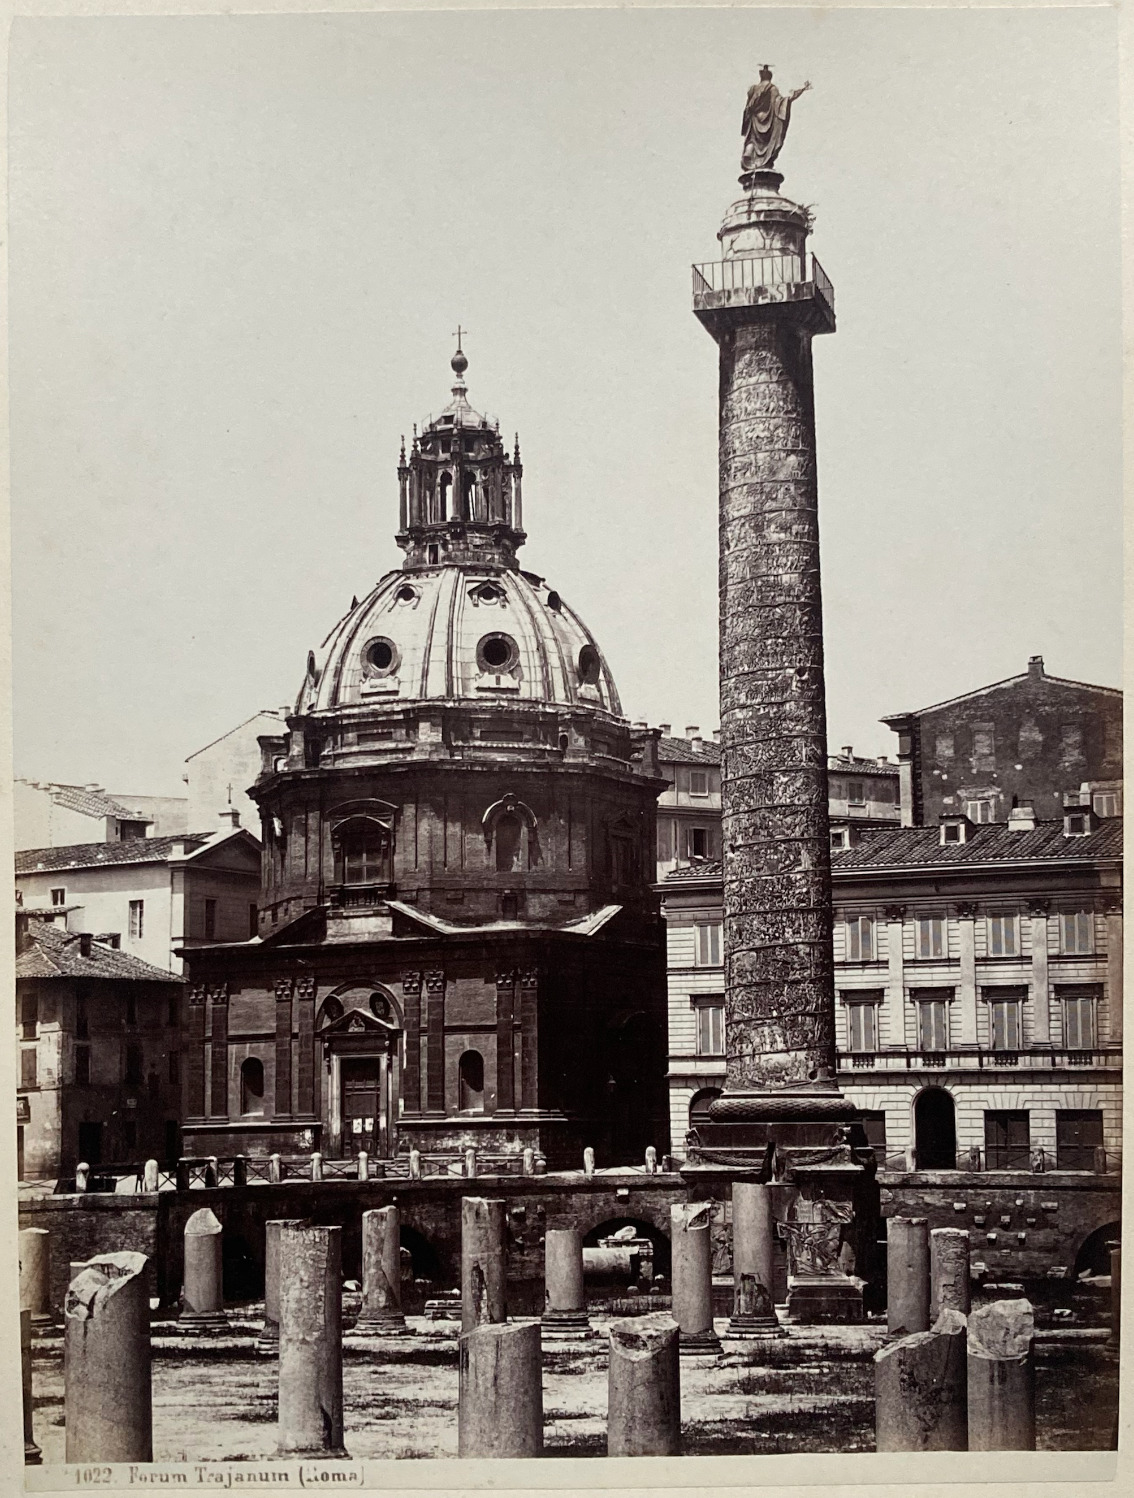 Giorgio Sommer, Rome, Forum Trajan, c.1880, vintage albumines